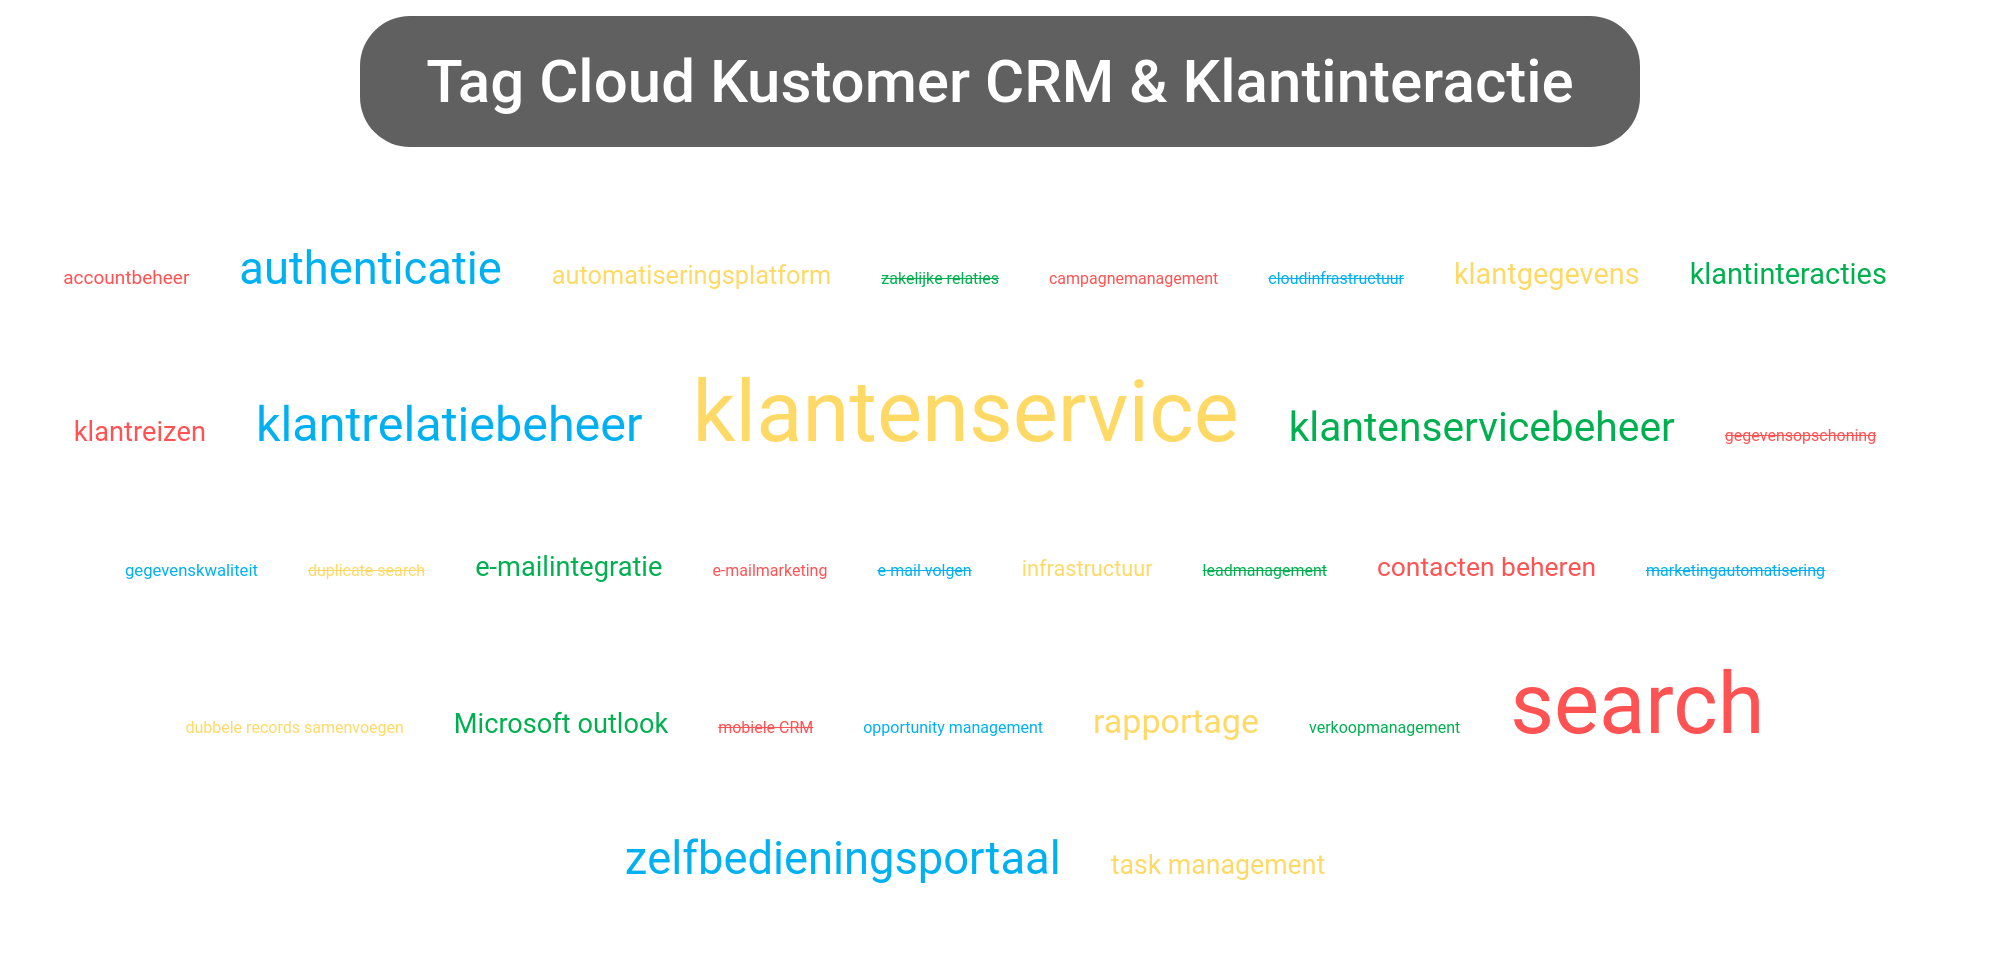 Tag cloud van Kustomer CRM tools.